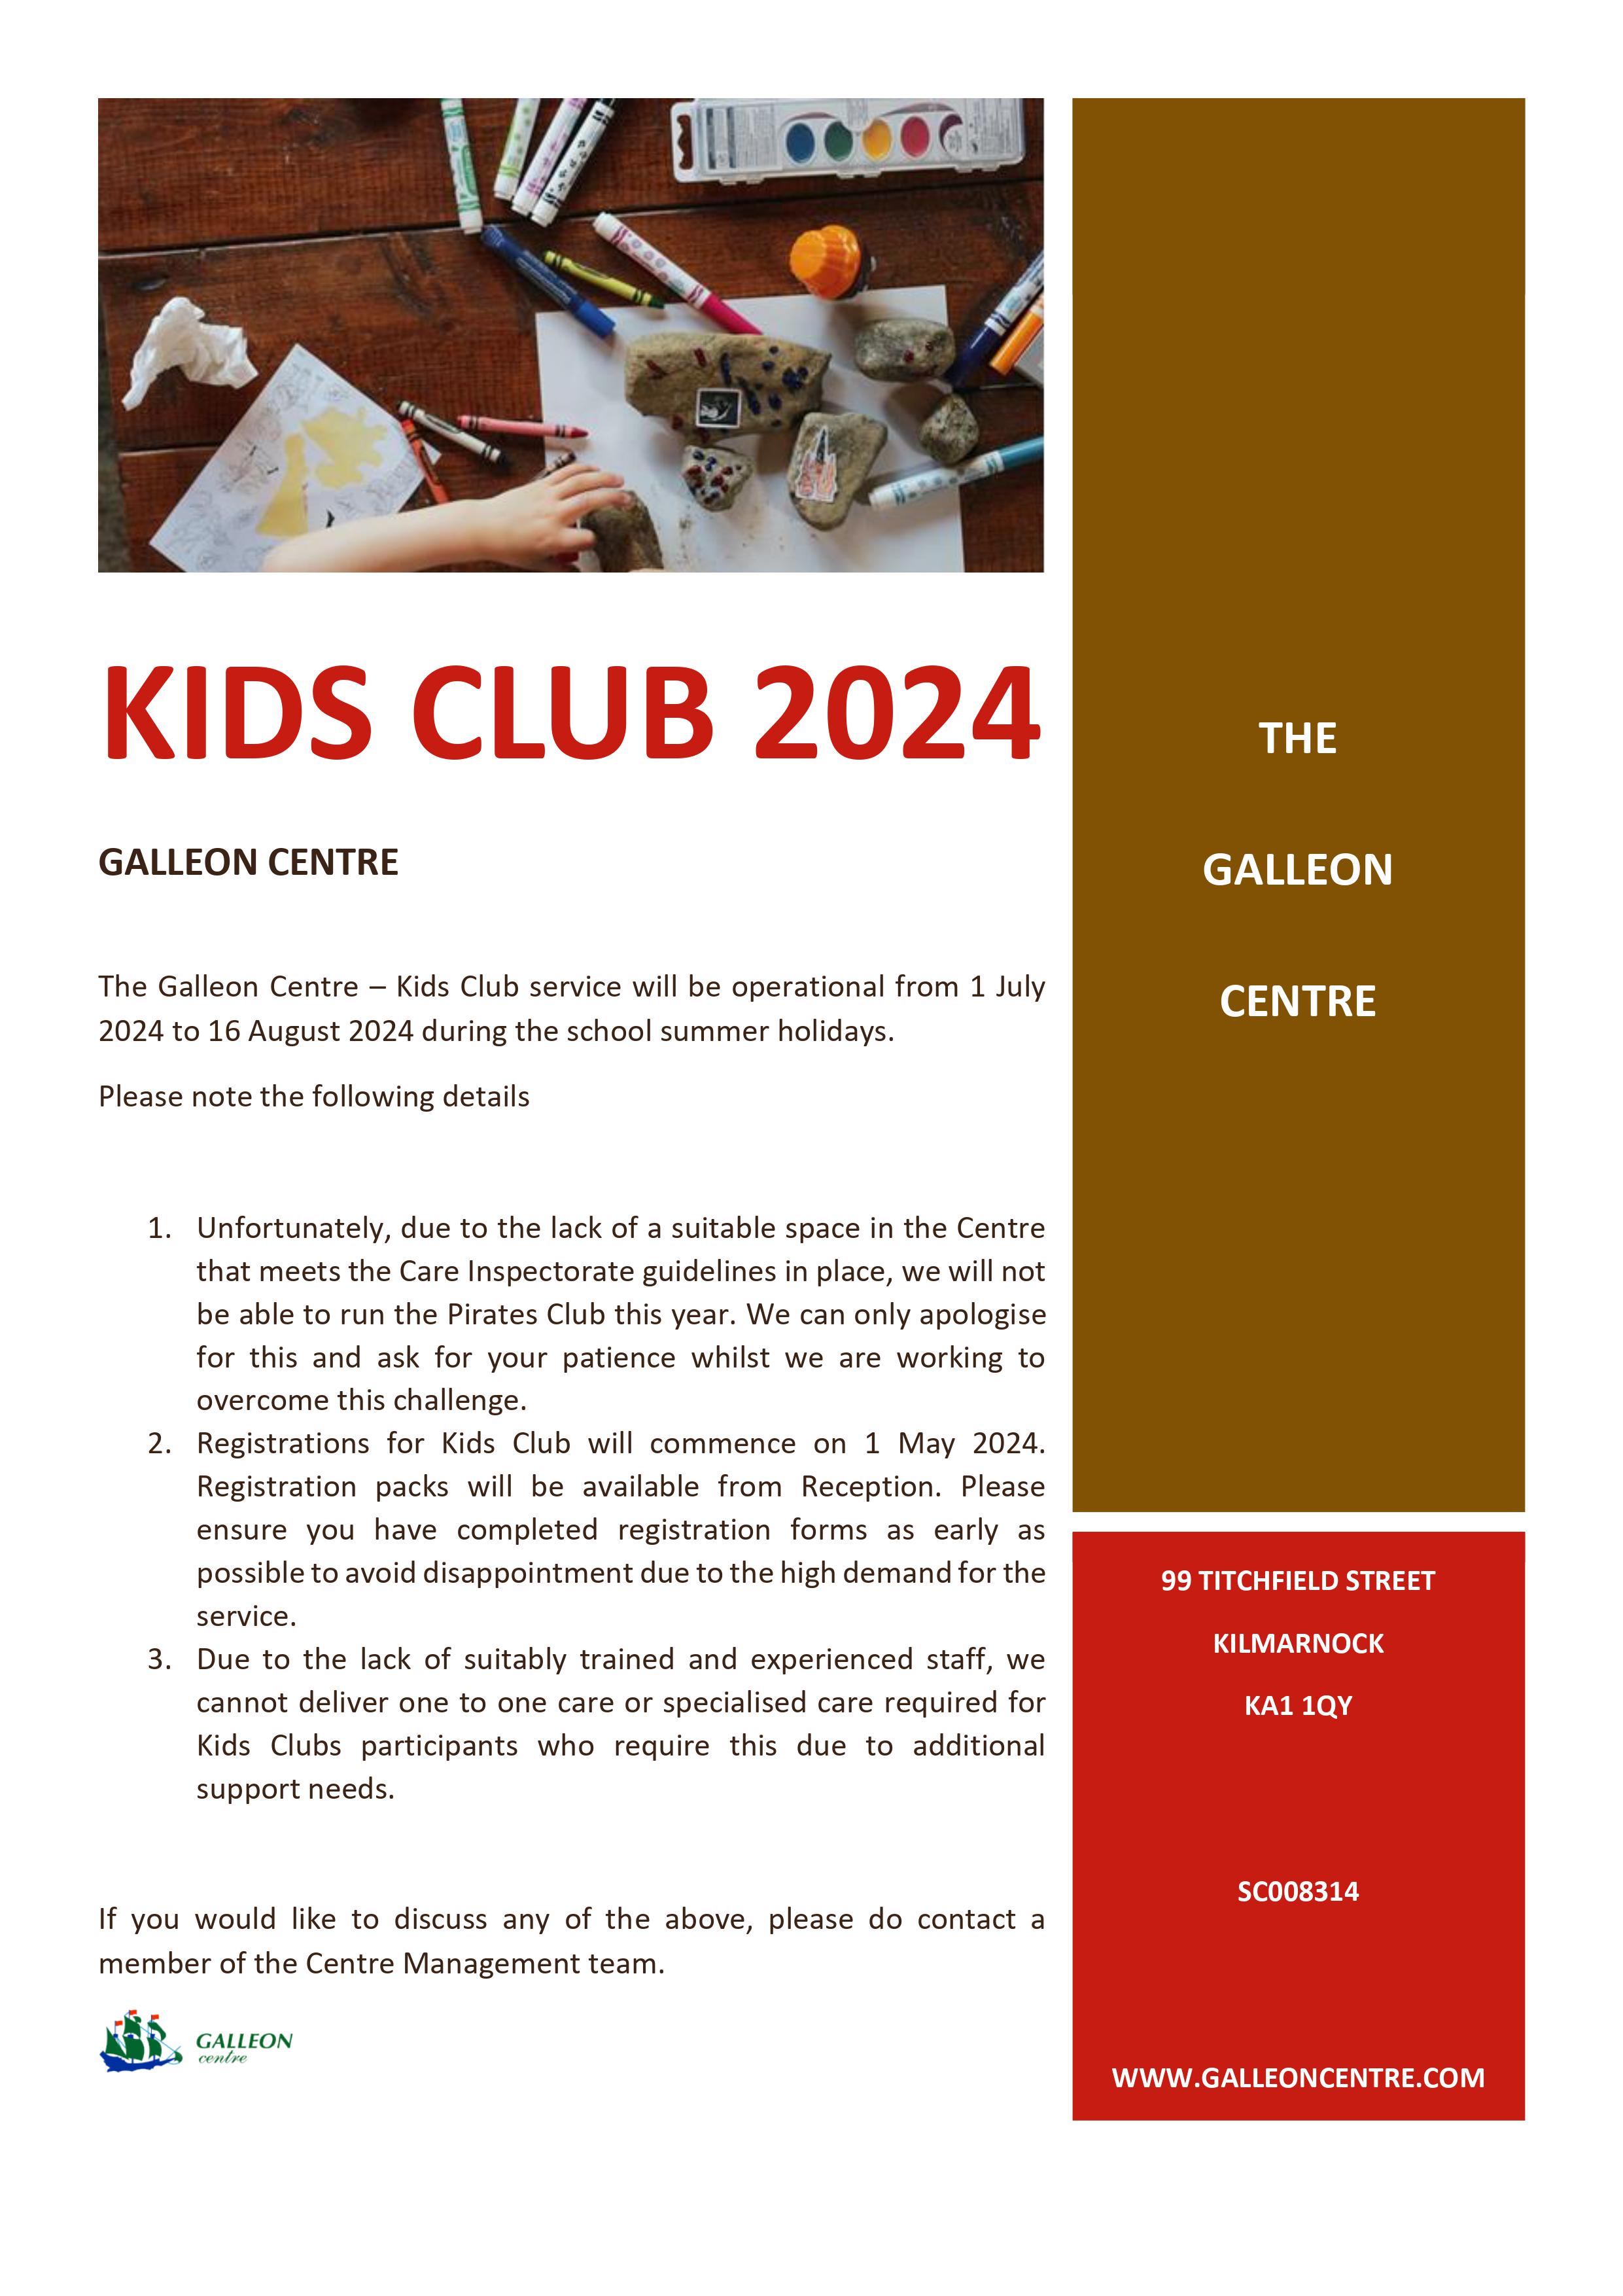 Kids Club 2024 Customer notice